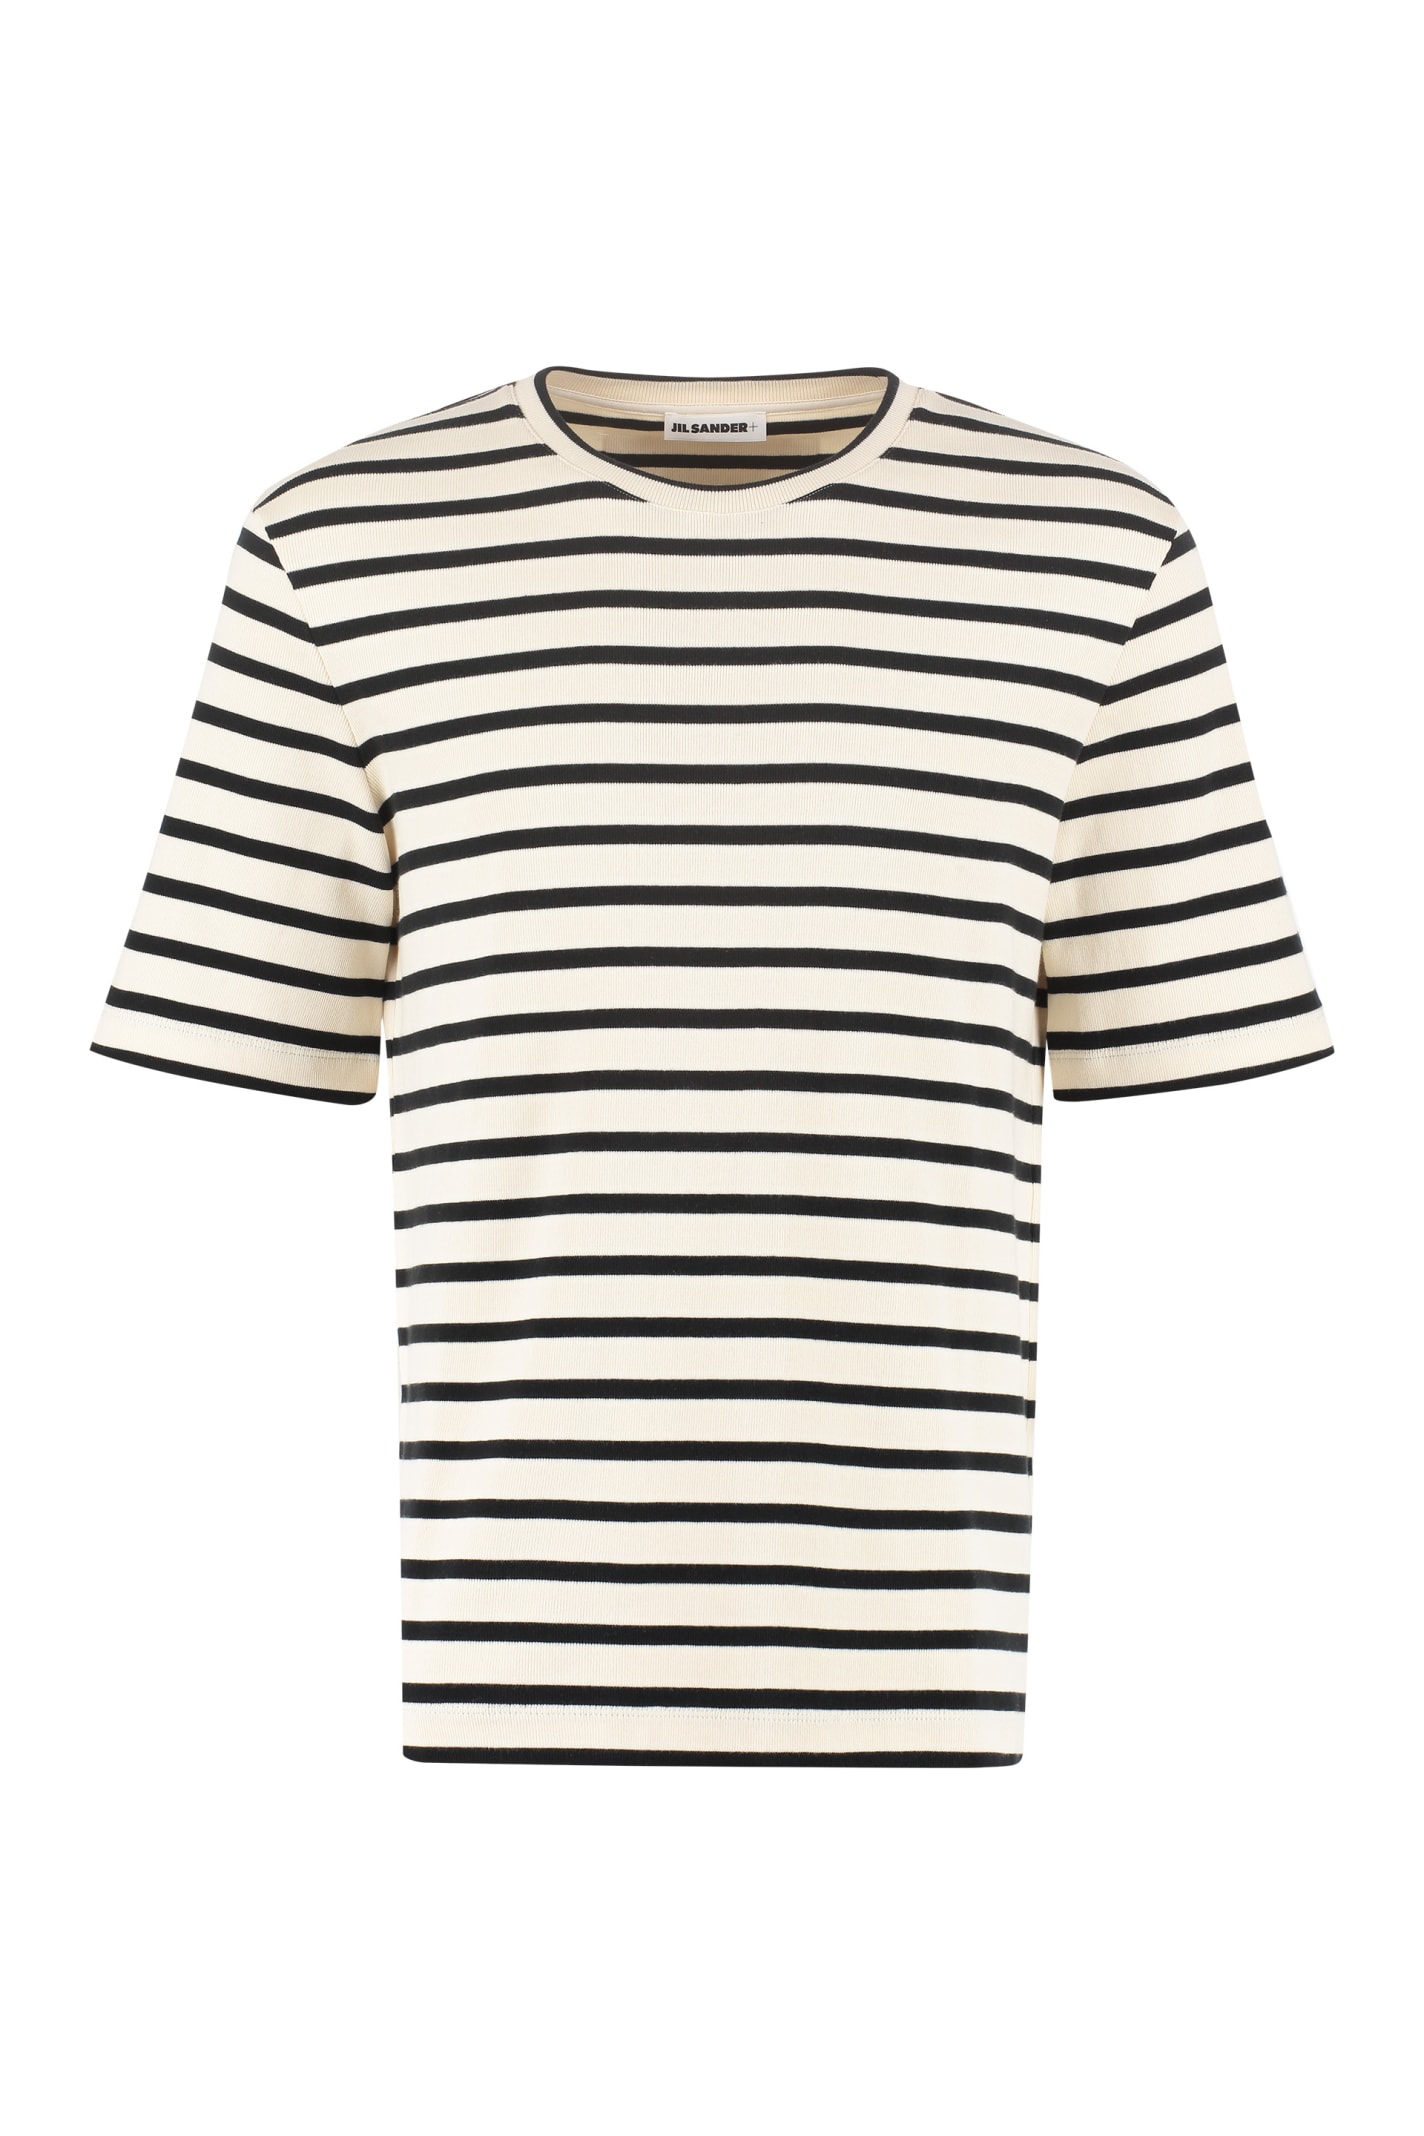 Jil Sander Striped Jersey T-shirt